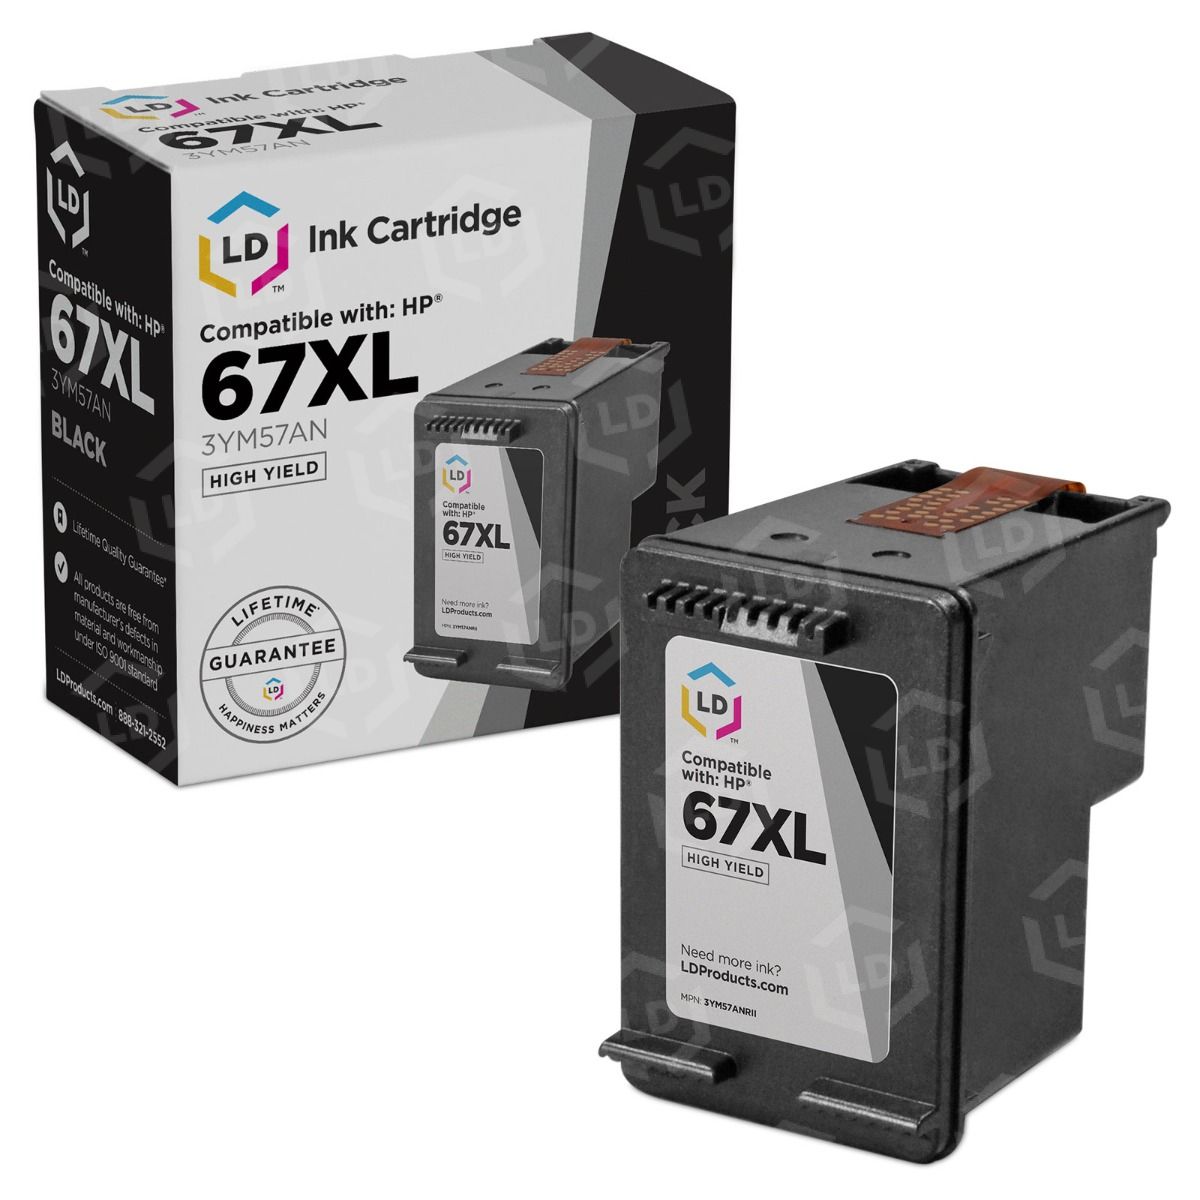 HP 364 XL Photo Black (CB322EE) Remanufactured Cartridge